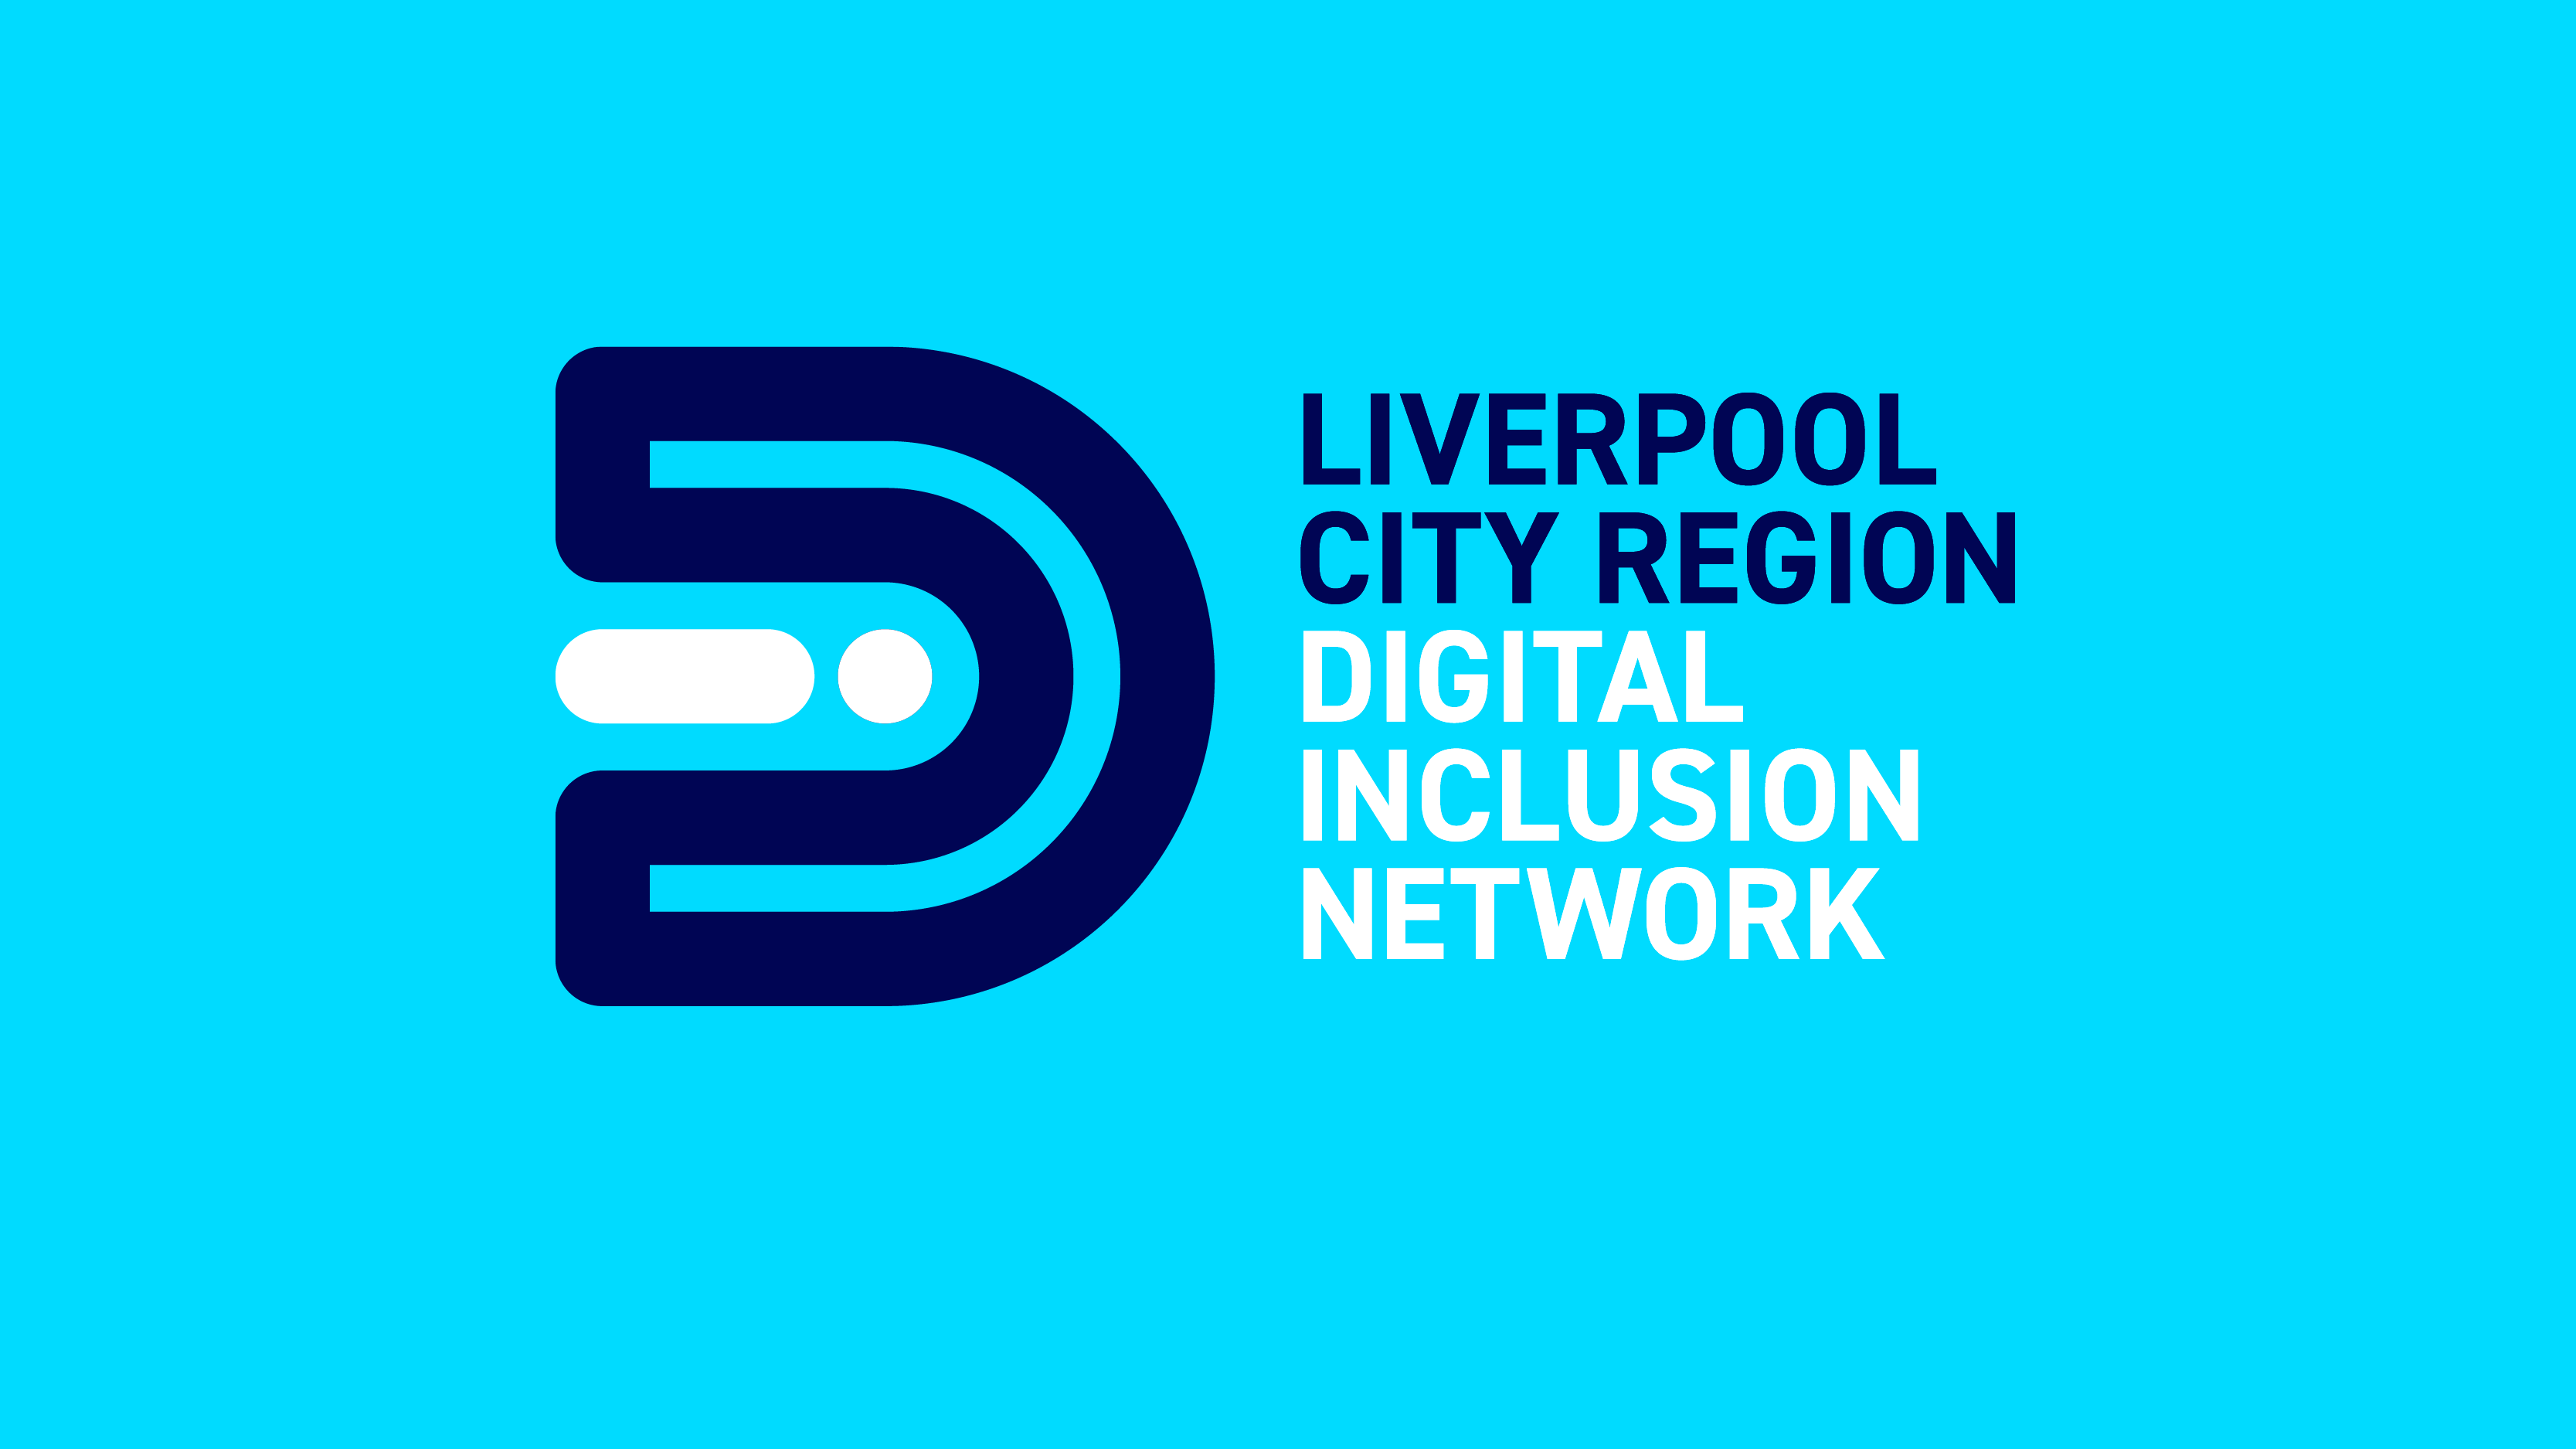 Digital Inclusion Network logo on bright blue background